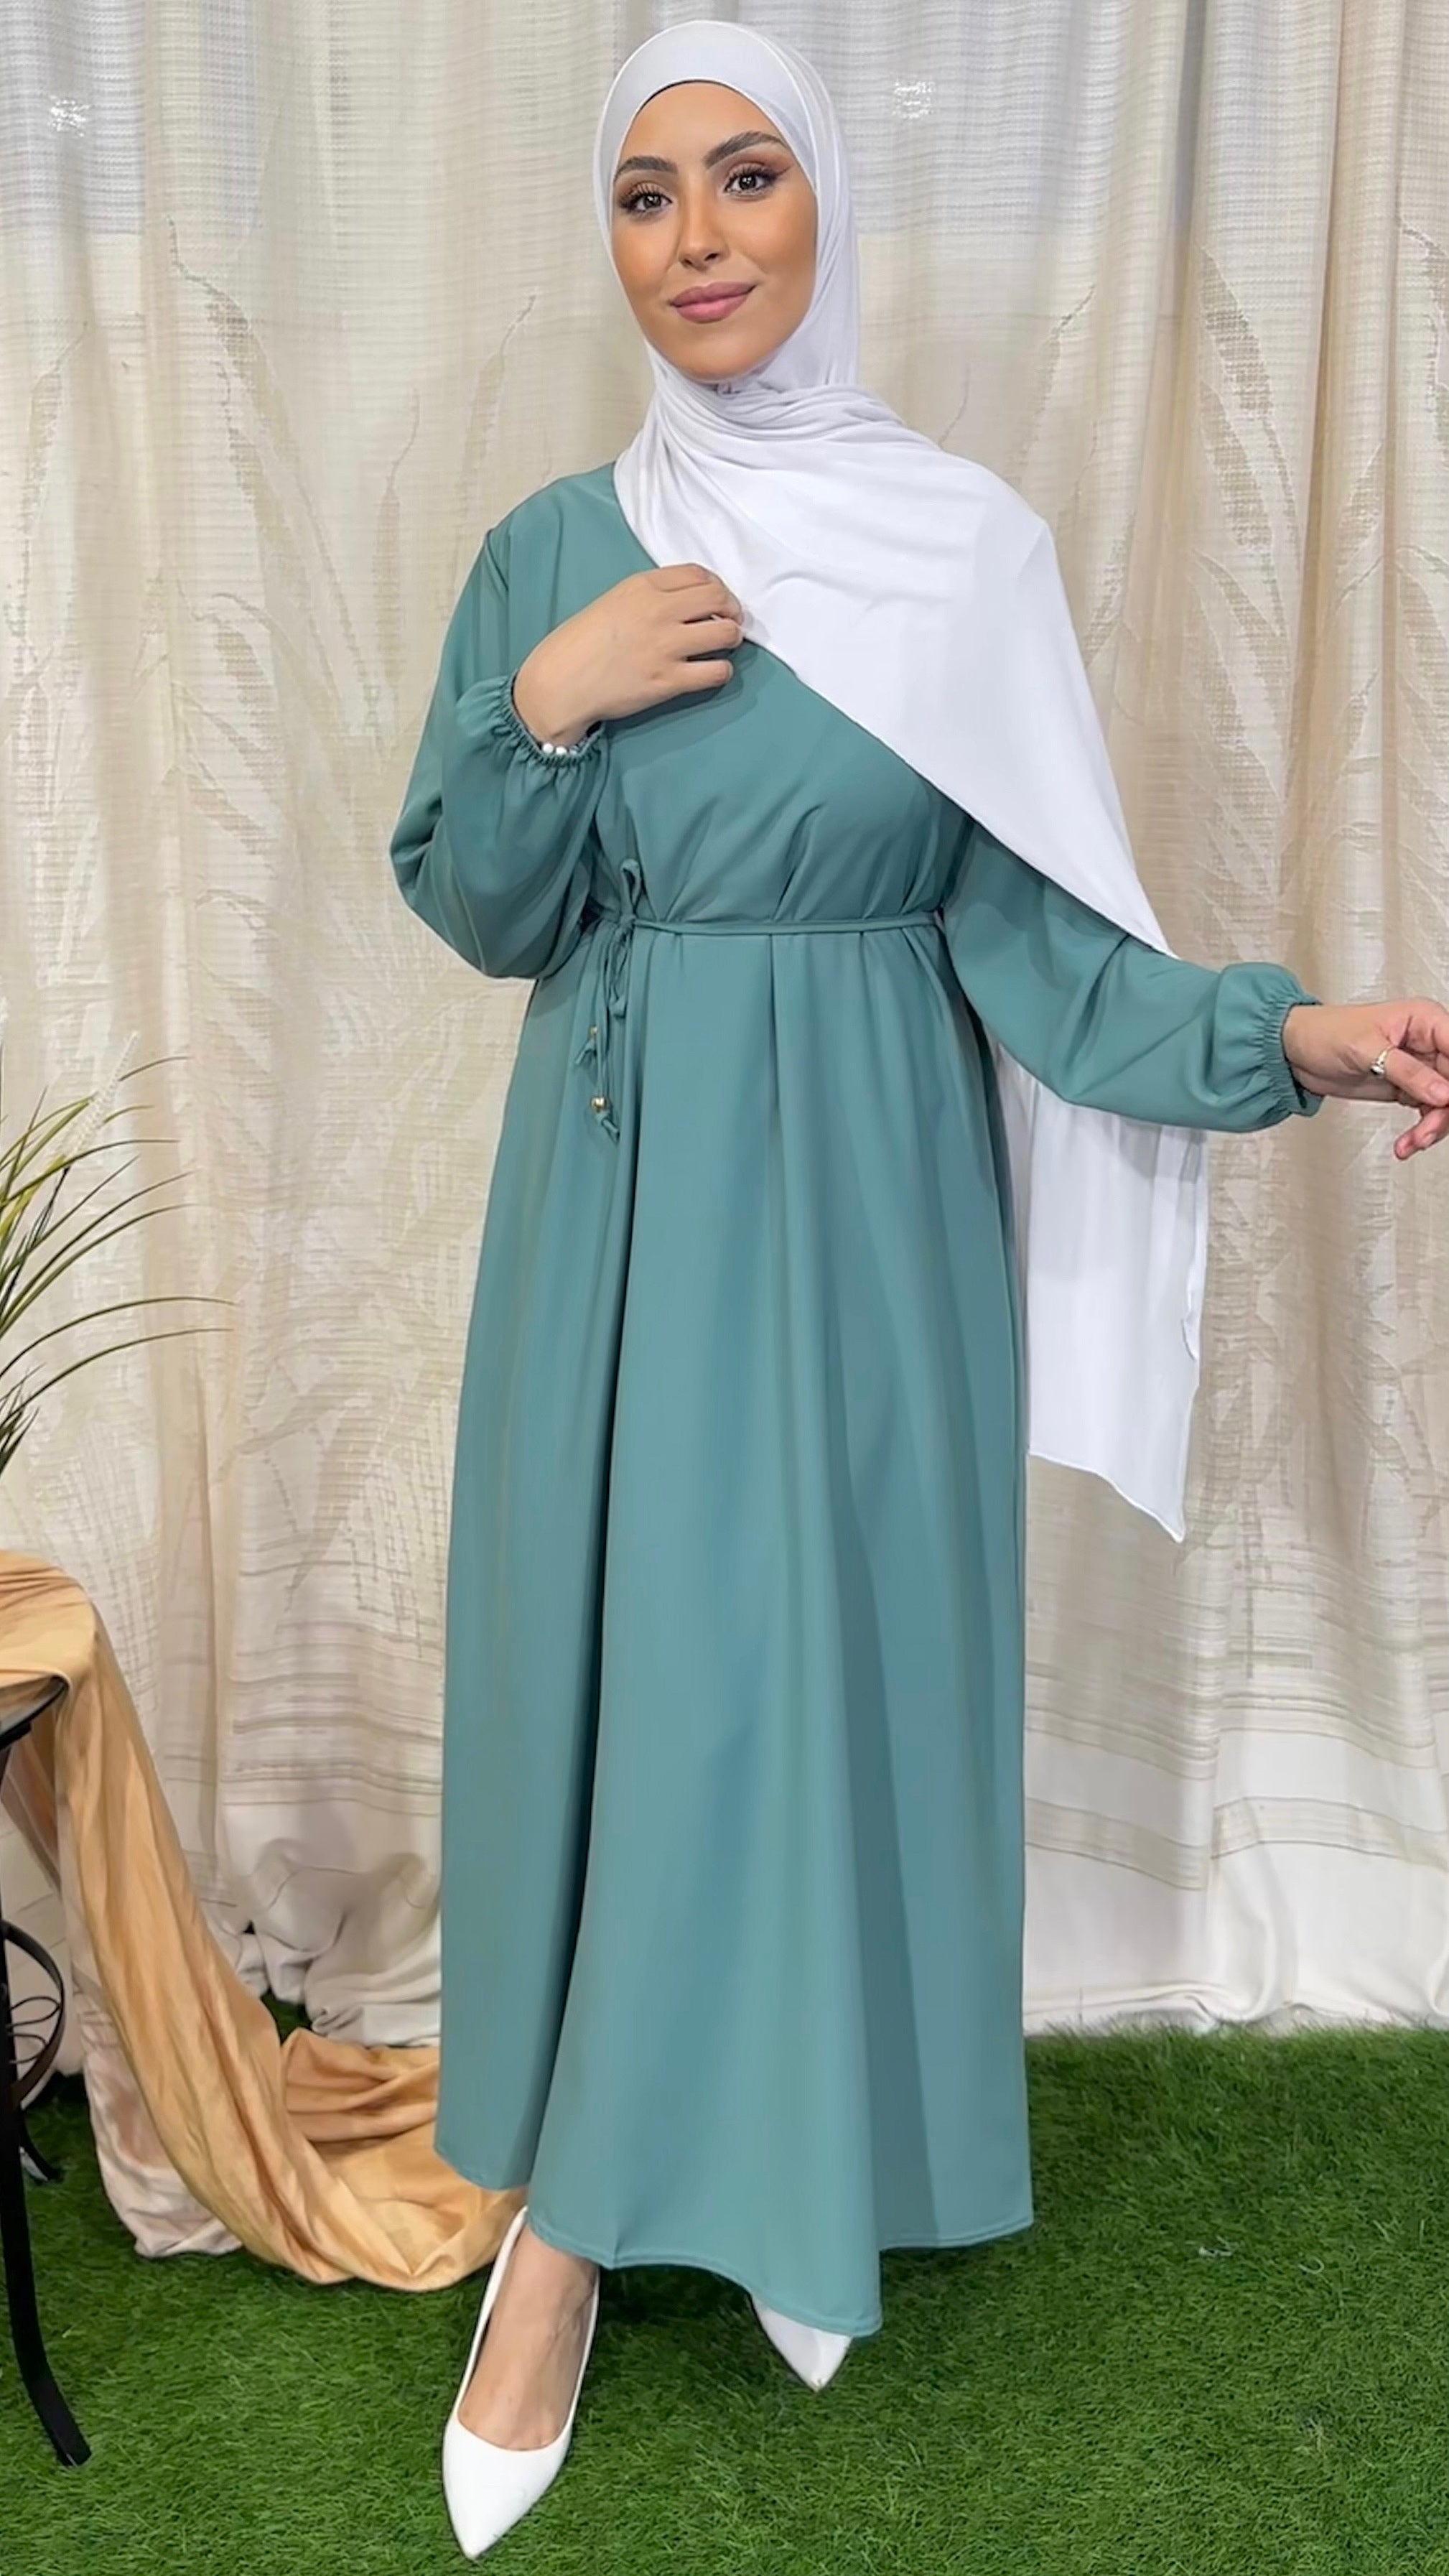 Vestito, abaya, semplice, colore unico, cintutino in vita, polsi arricciati, donna islamica, modest dress , Hijab Paradise, verde acqua hijab bianco